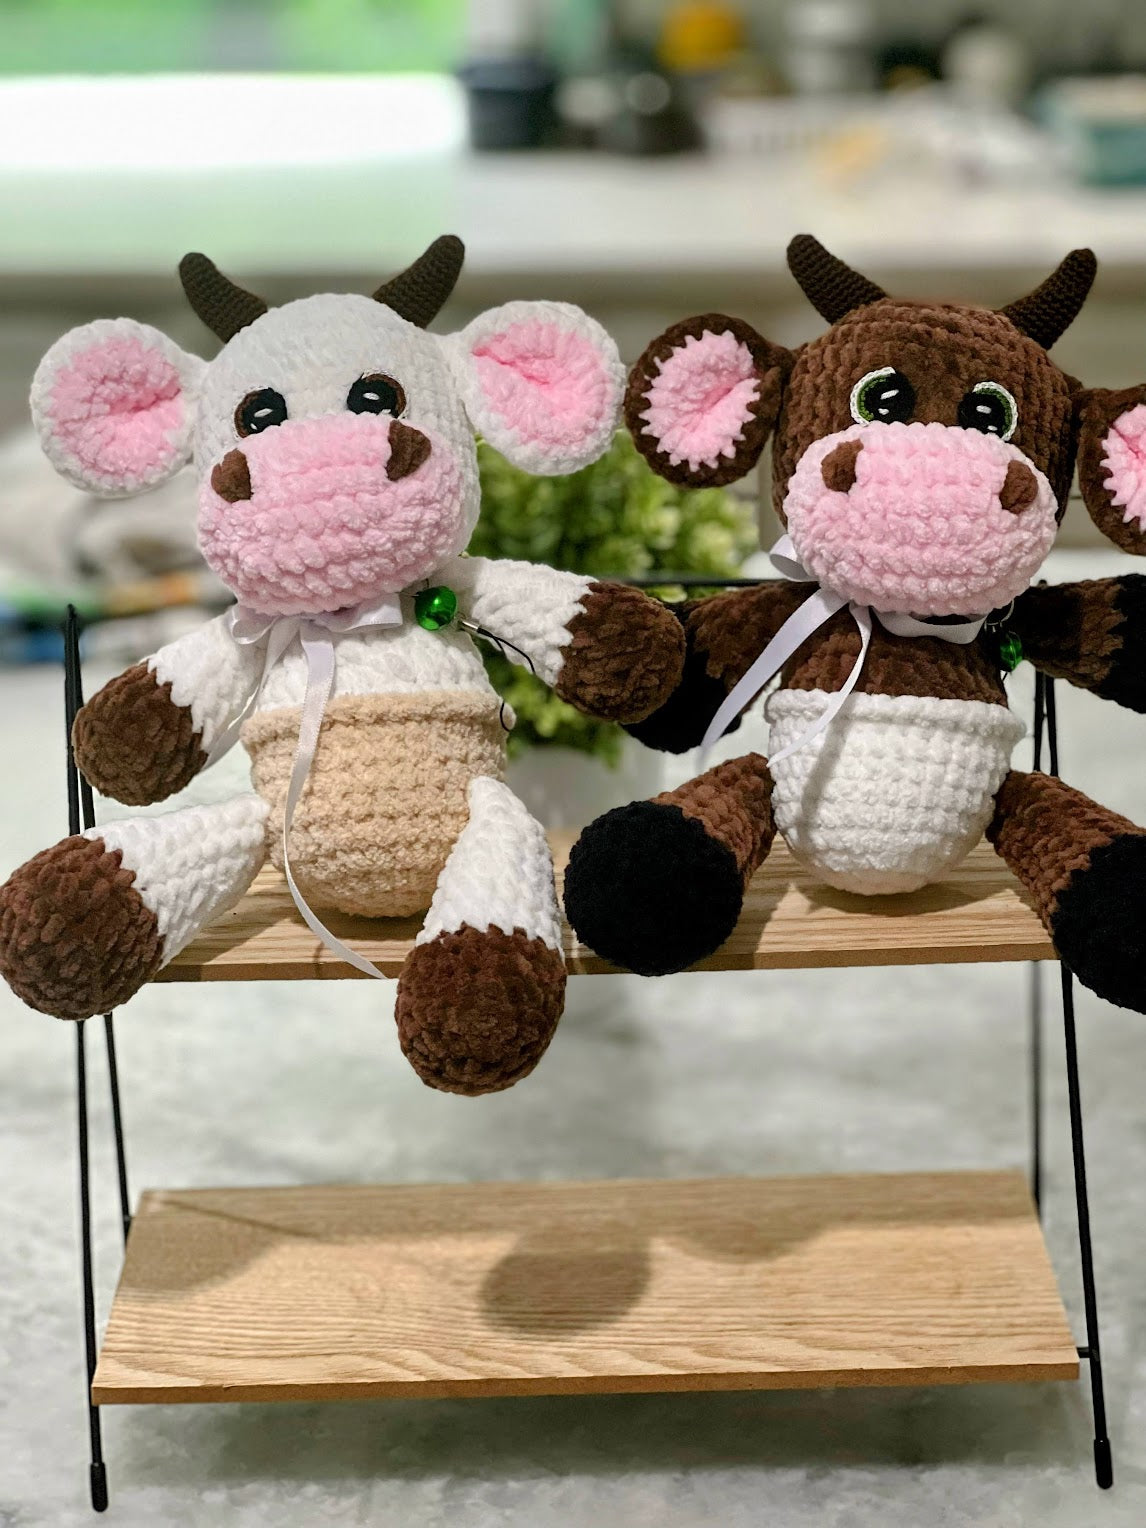 Stuffed Cow Toy - Crochet Knitted Amigurumi Toy